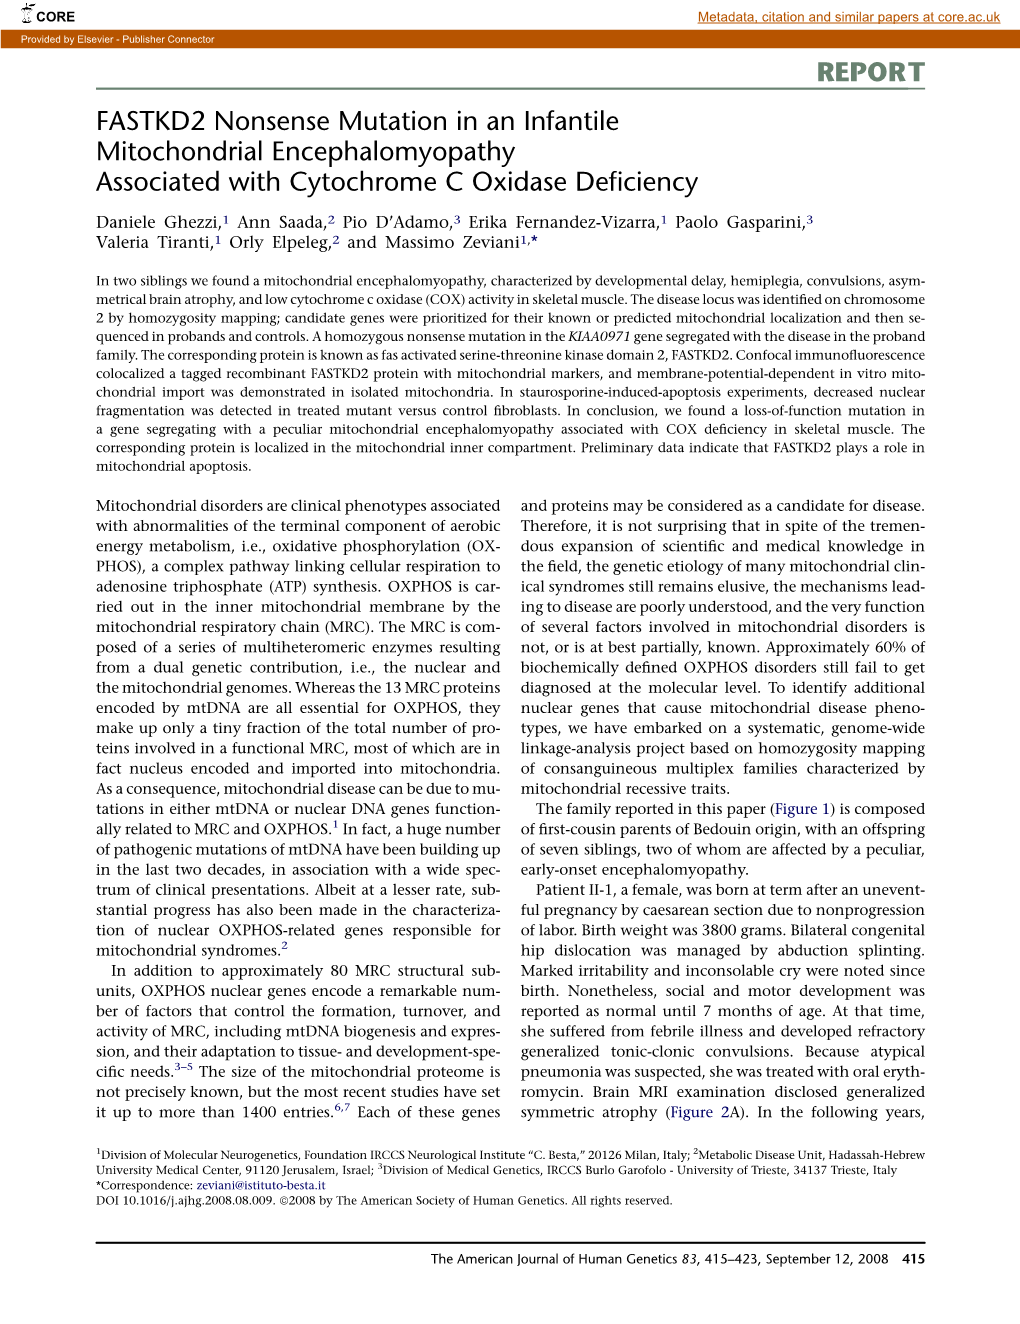 REPORT FASTKD2 Nonsense Mutation in an Infantile Mitochondrial Encephalomyopathy Associated with Cytochrome C Oxidase Deﬁciency